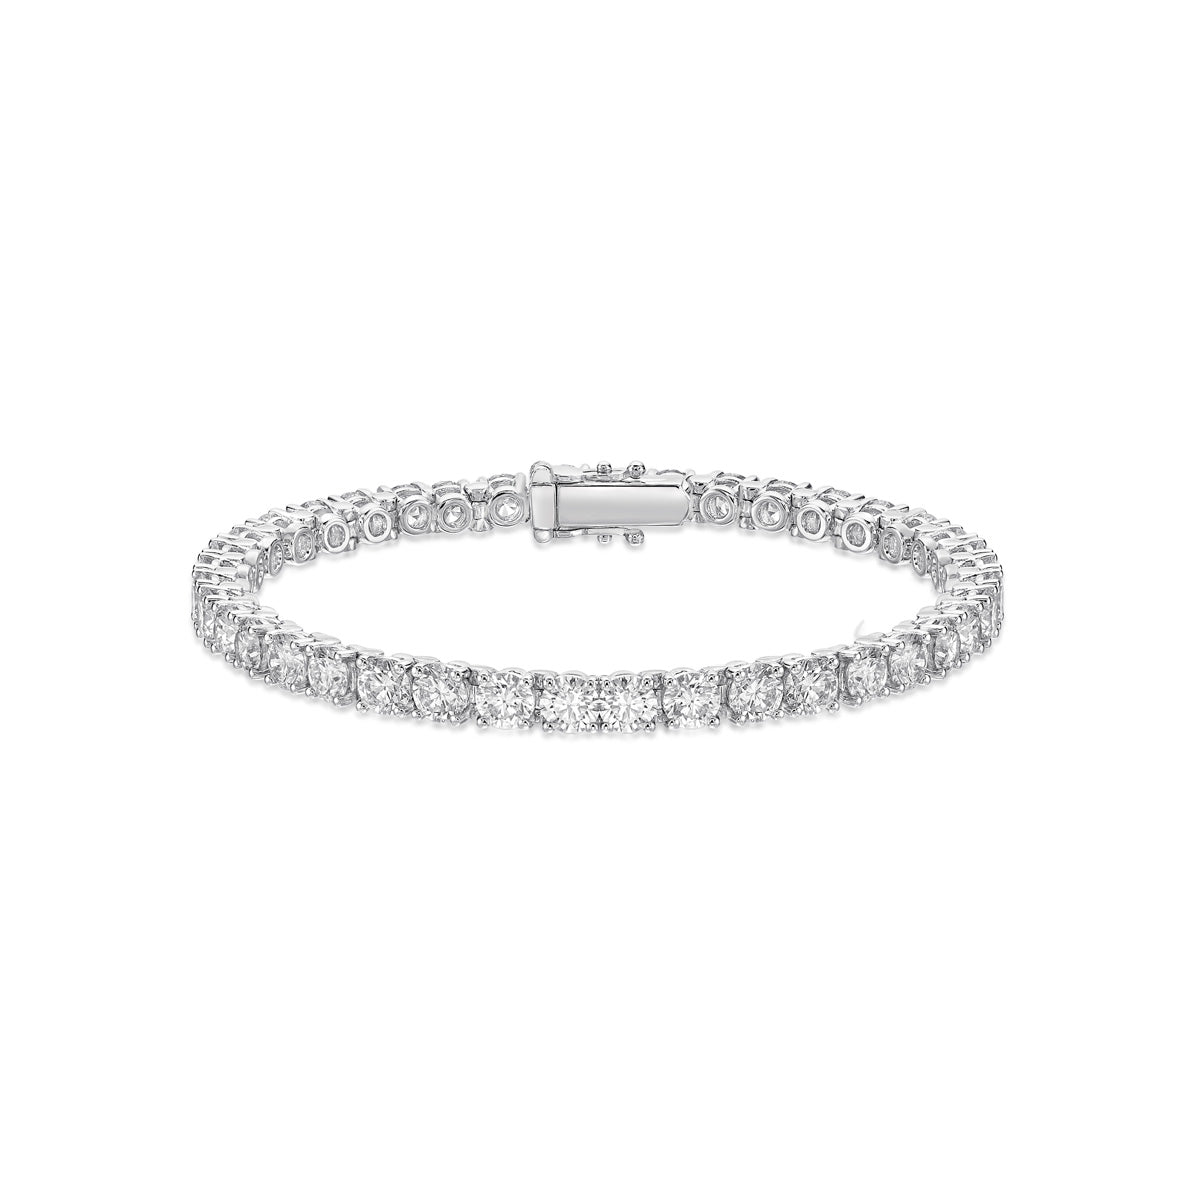 Classic Handmade 18K White Gold Diamond Tennis Bracelet with round brilliant diamonds